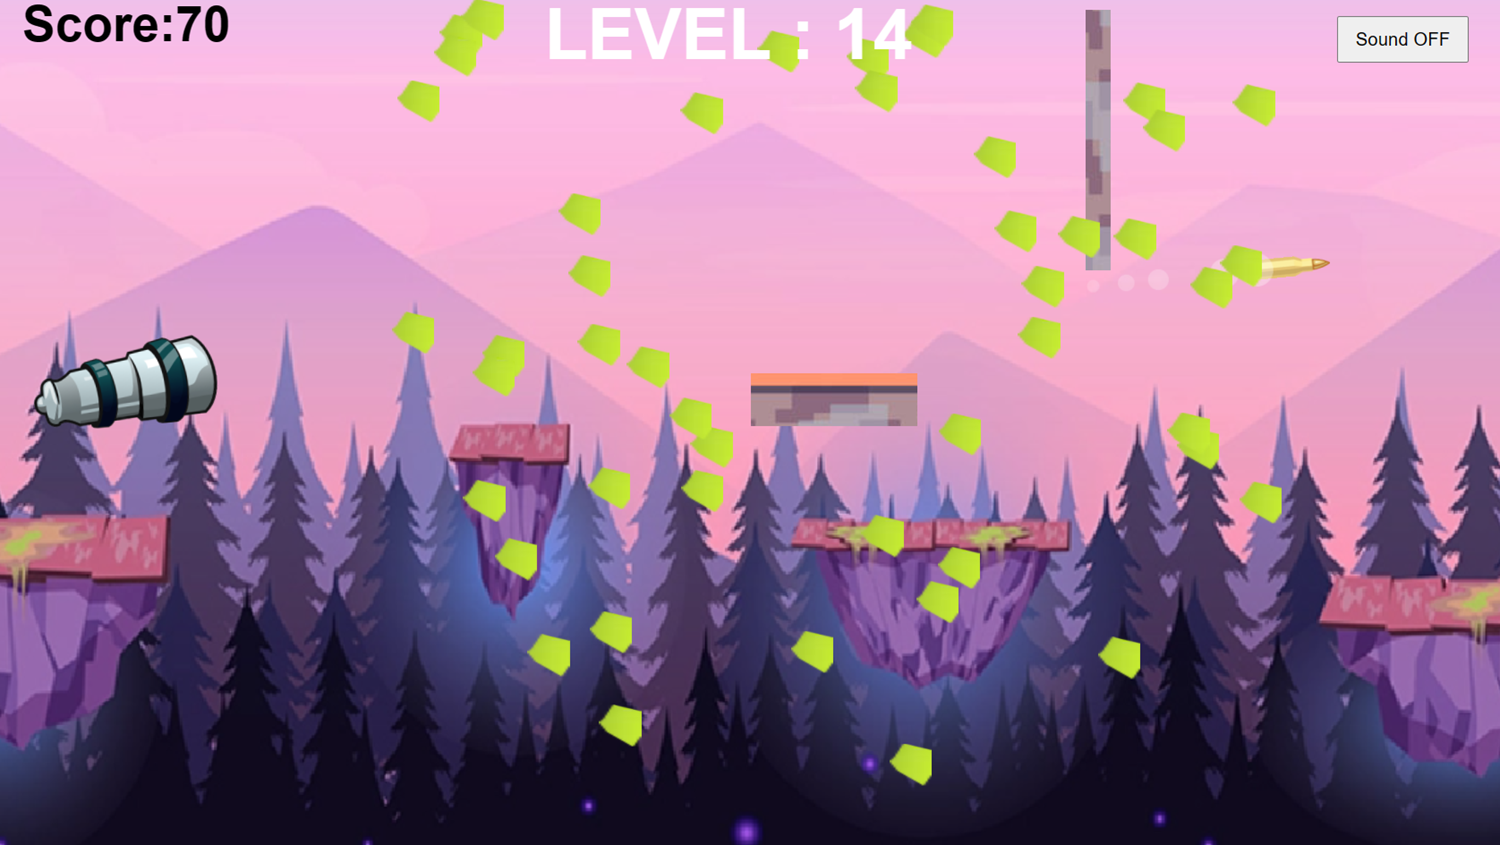 Bottle Smash Game Level Progress Screenshot.